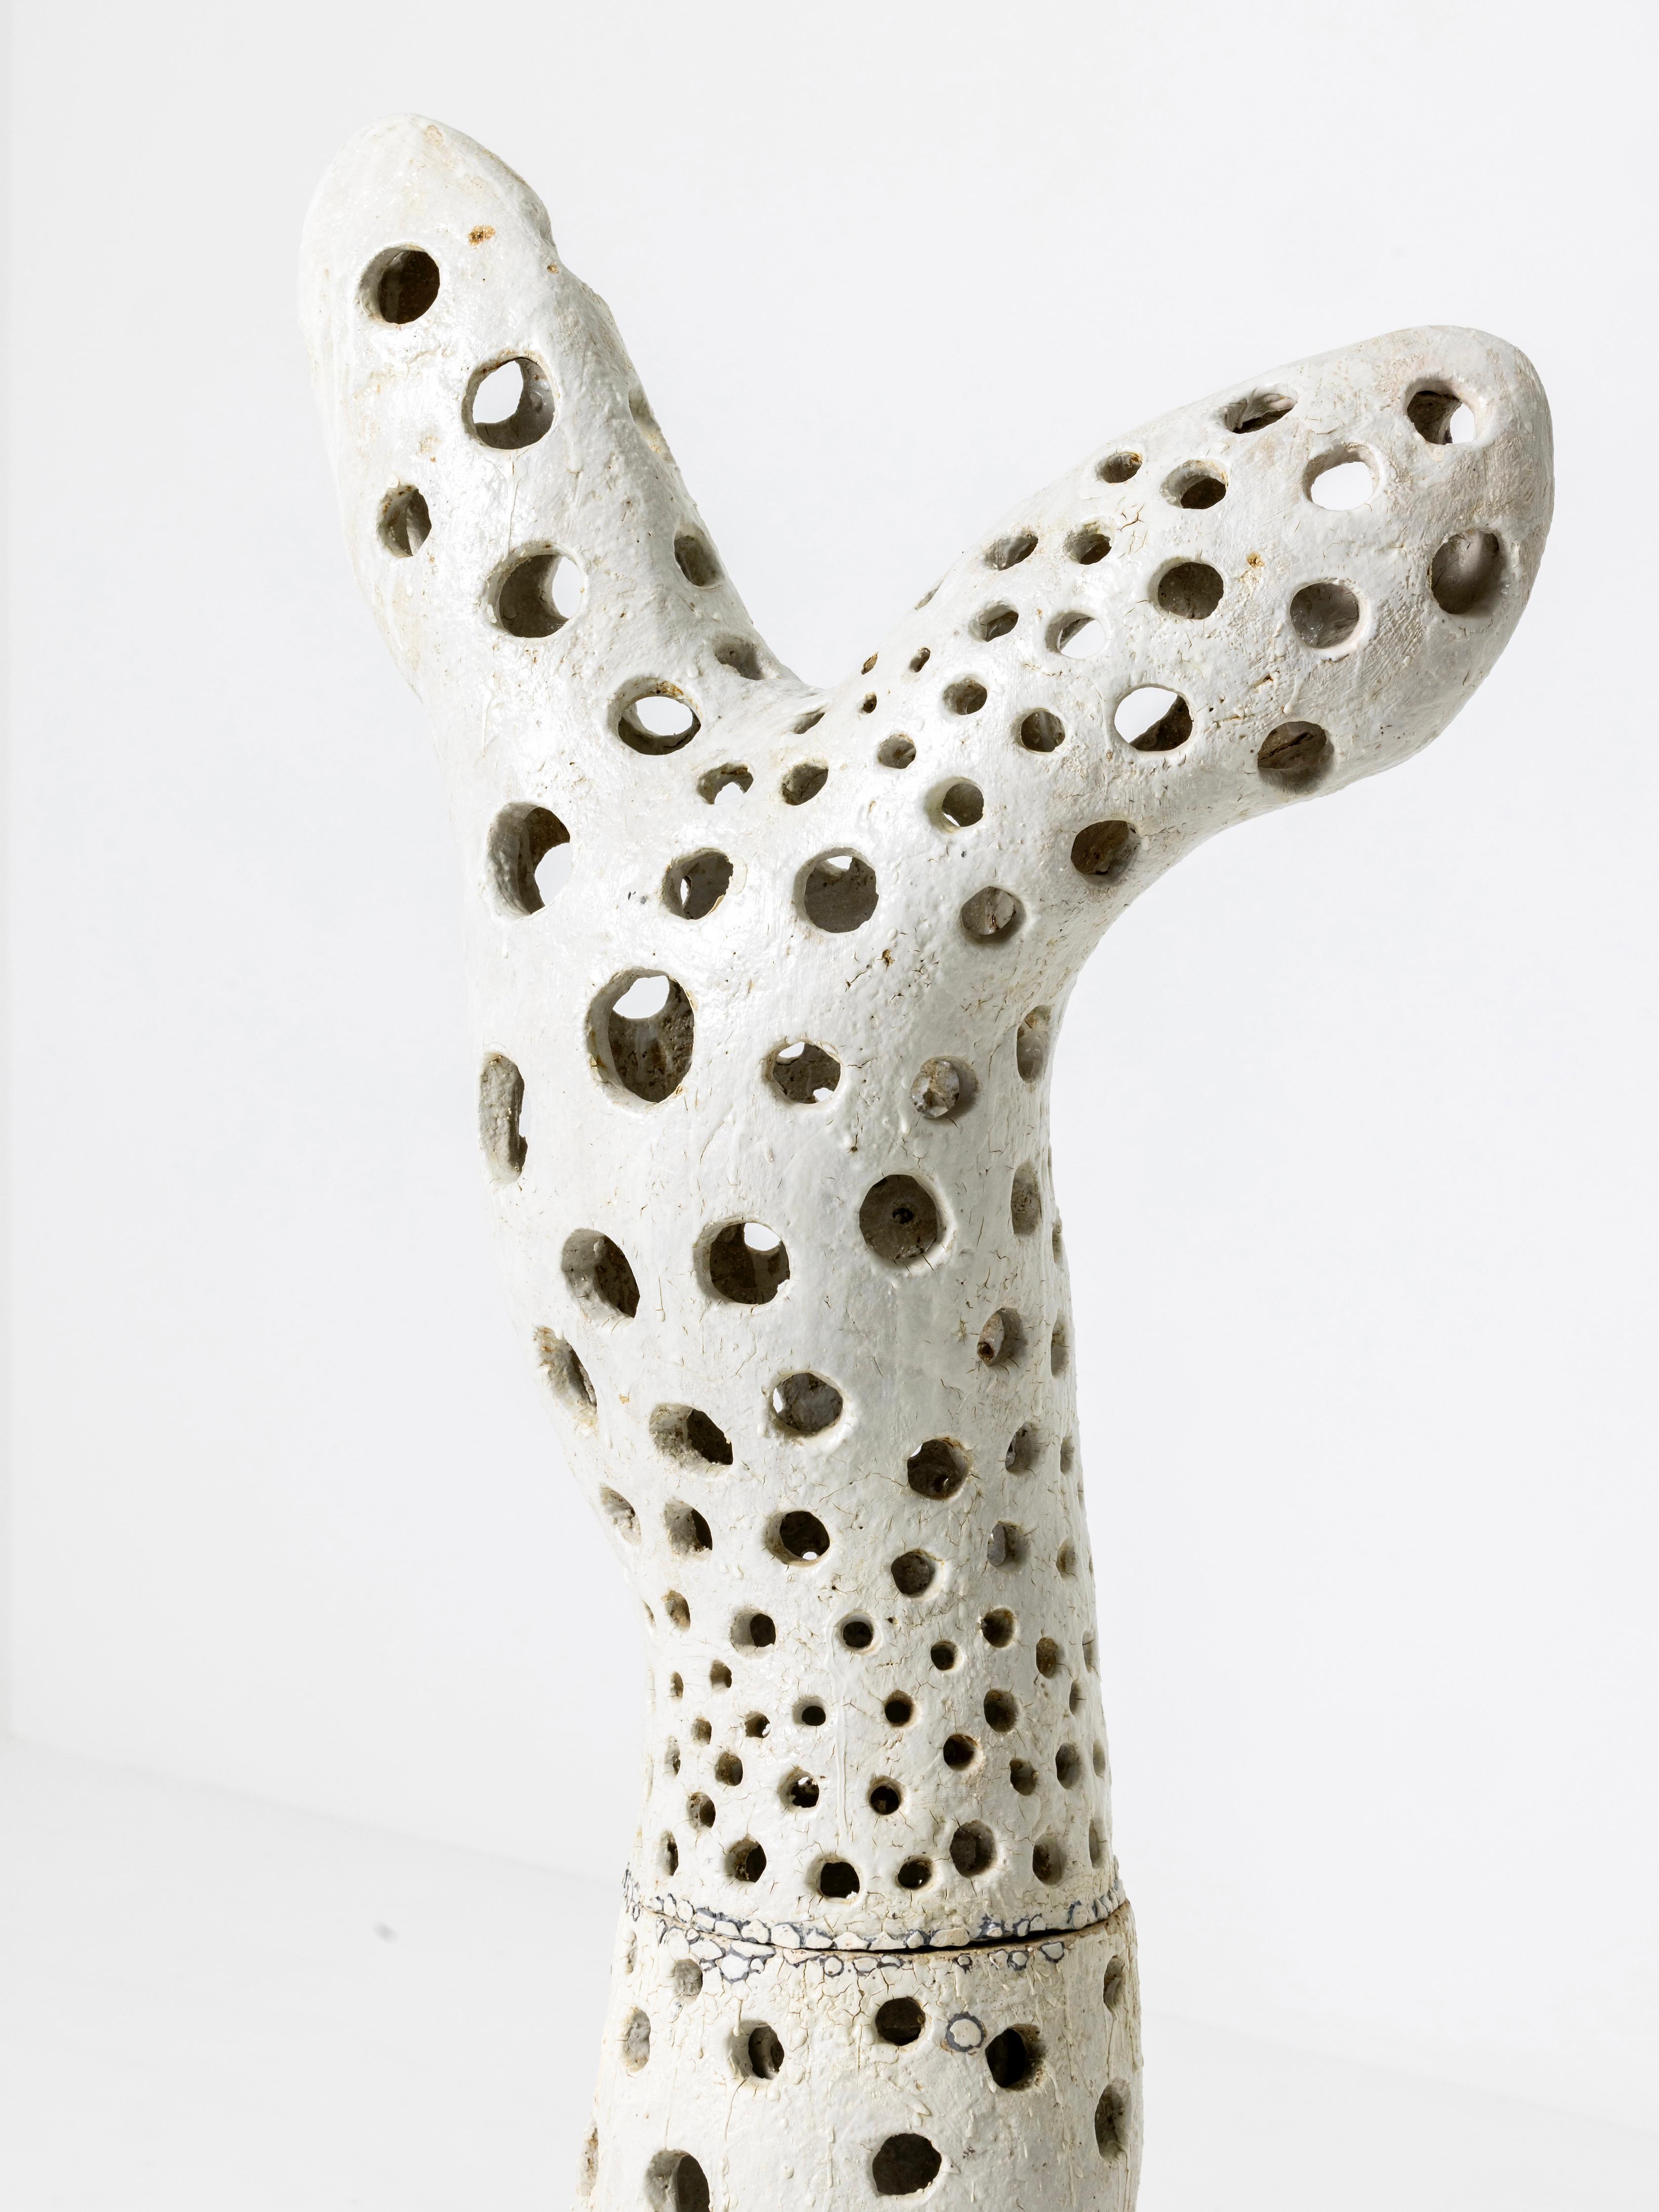 Organic Modern Contemporary Ceramic Sculpture 